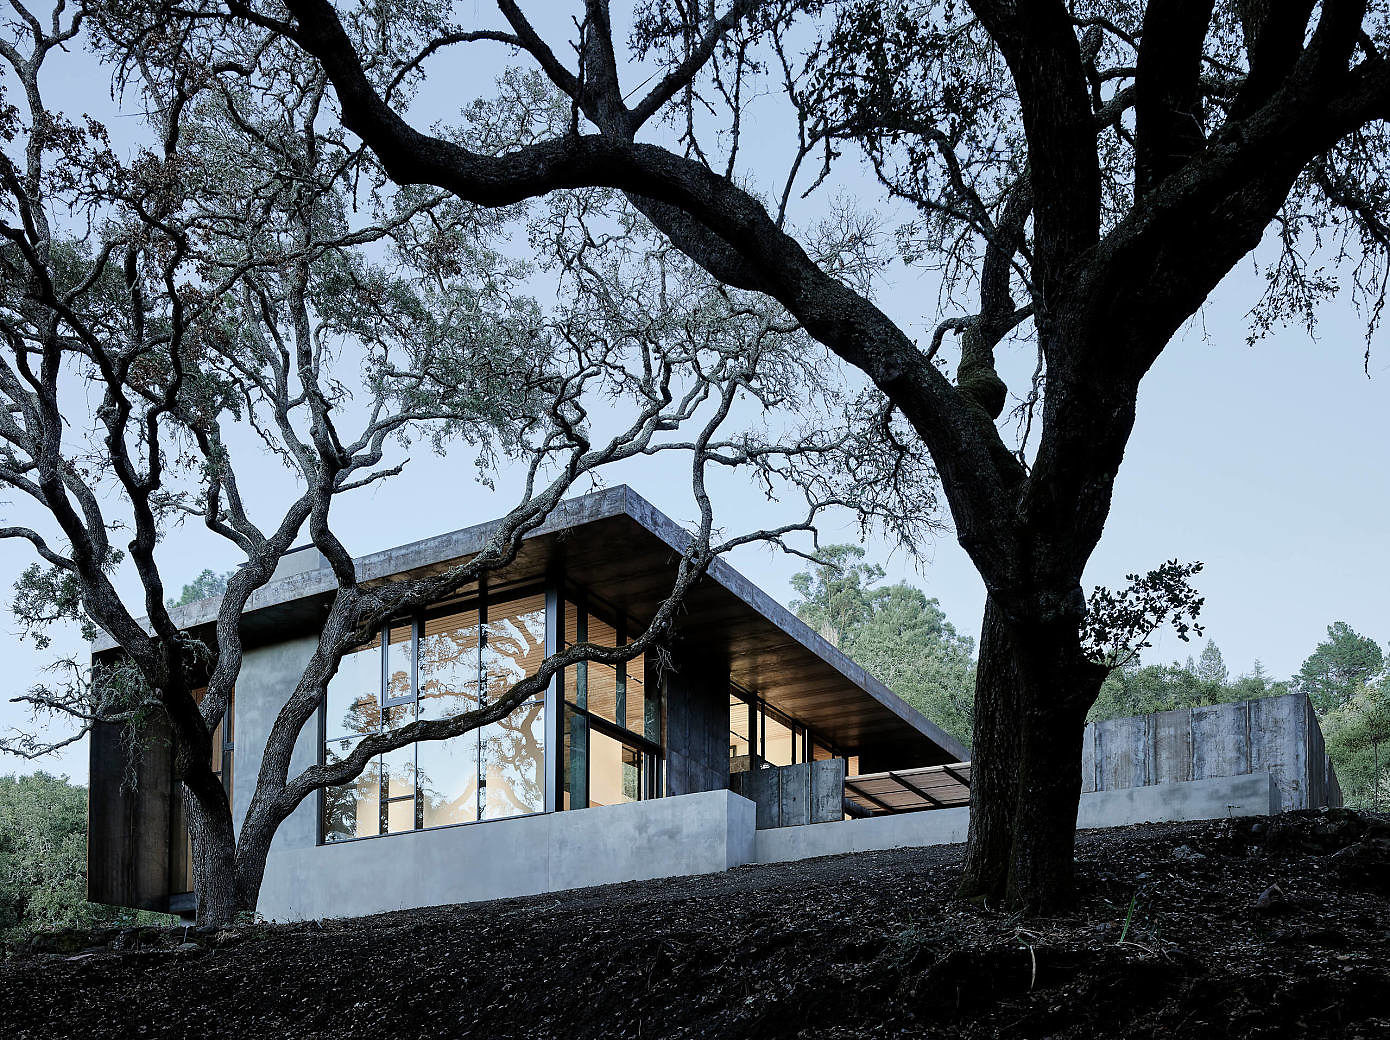 Treeside Residence by Faulkner Architects